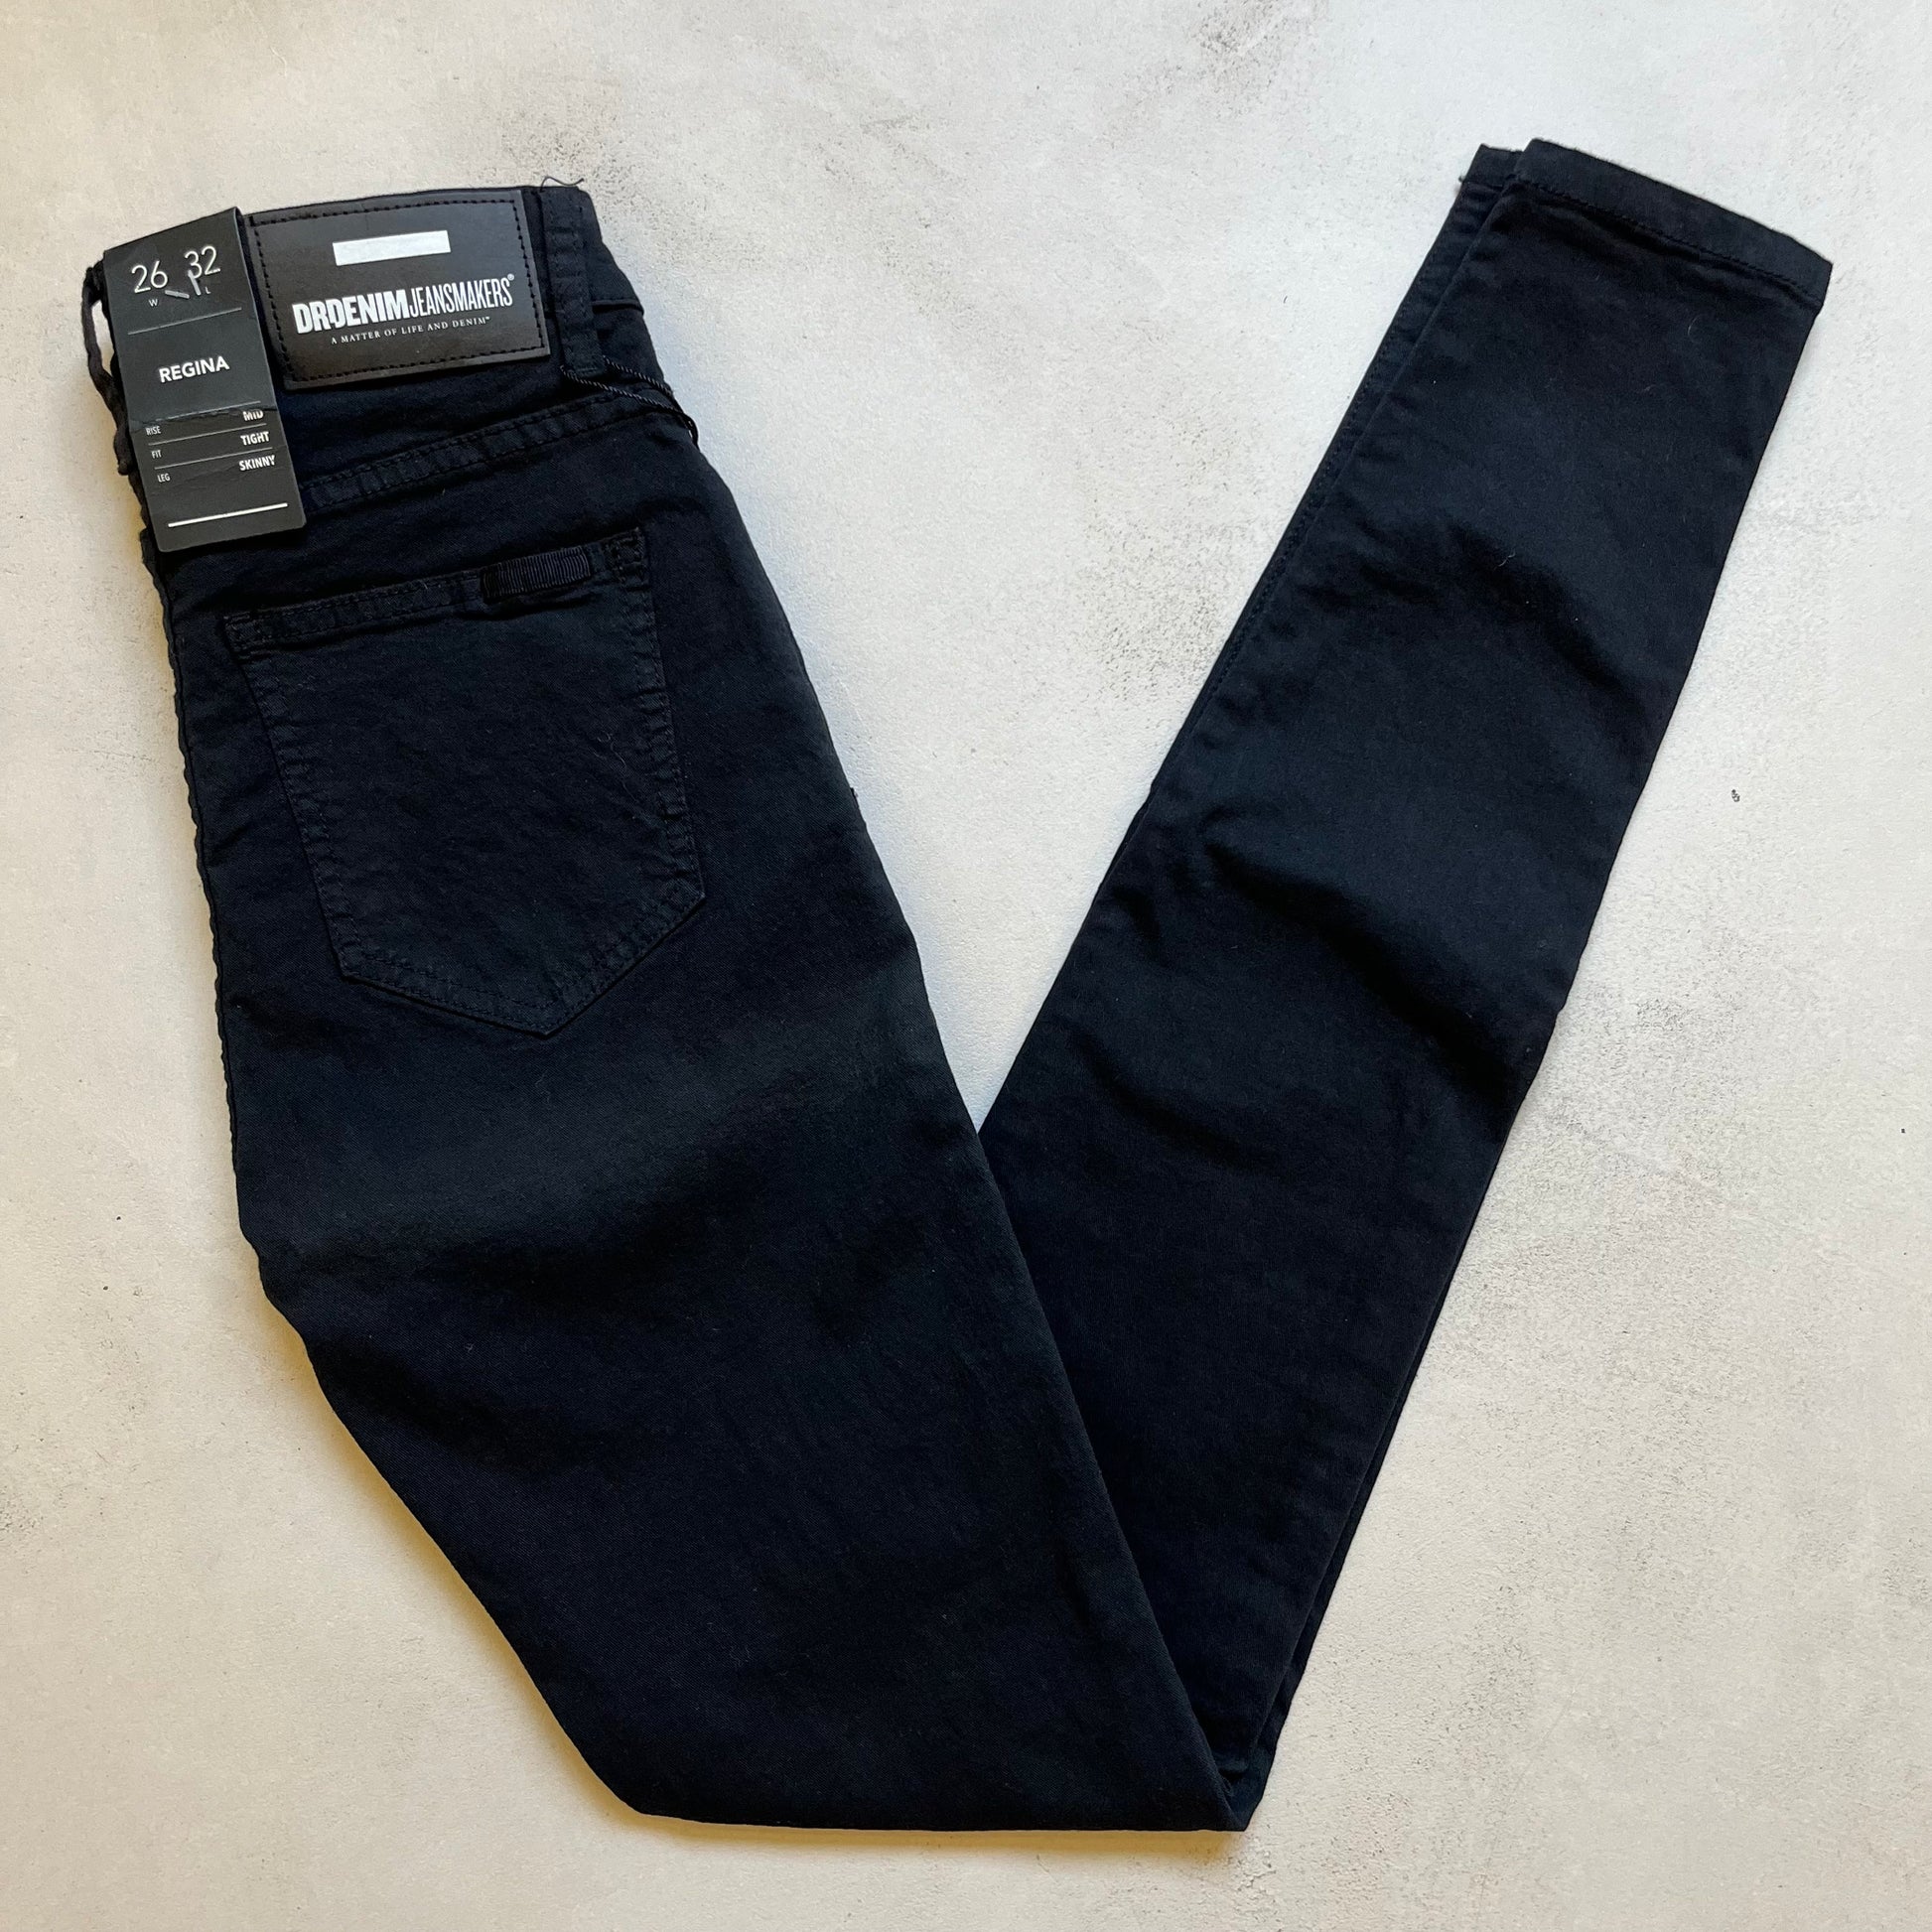 A pair of Dr Denim Regina - Black super stretch denim black jeans with a tag on them, perfect for Regina's skinny jean style.